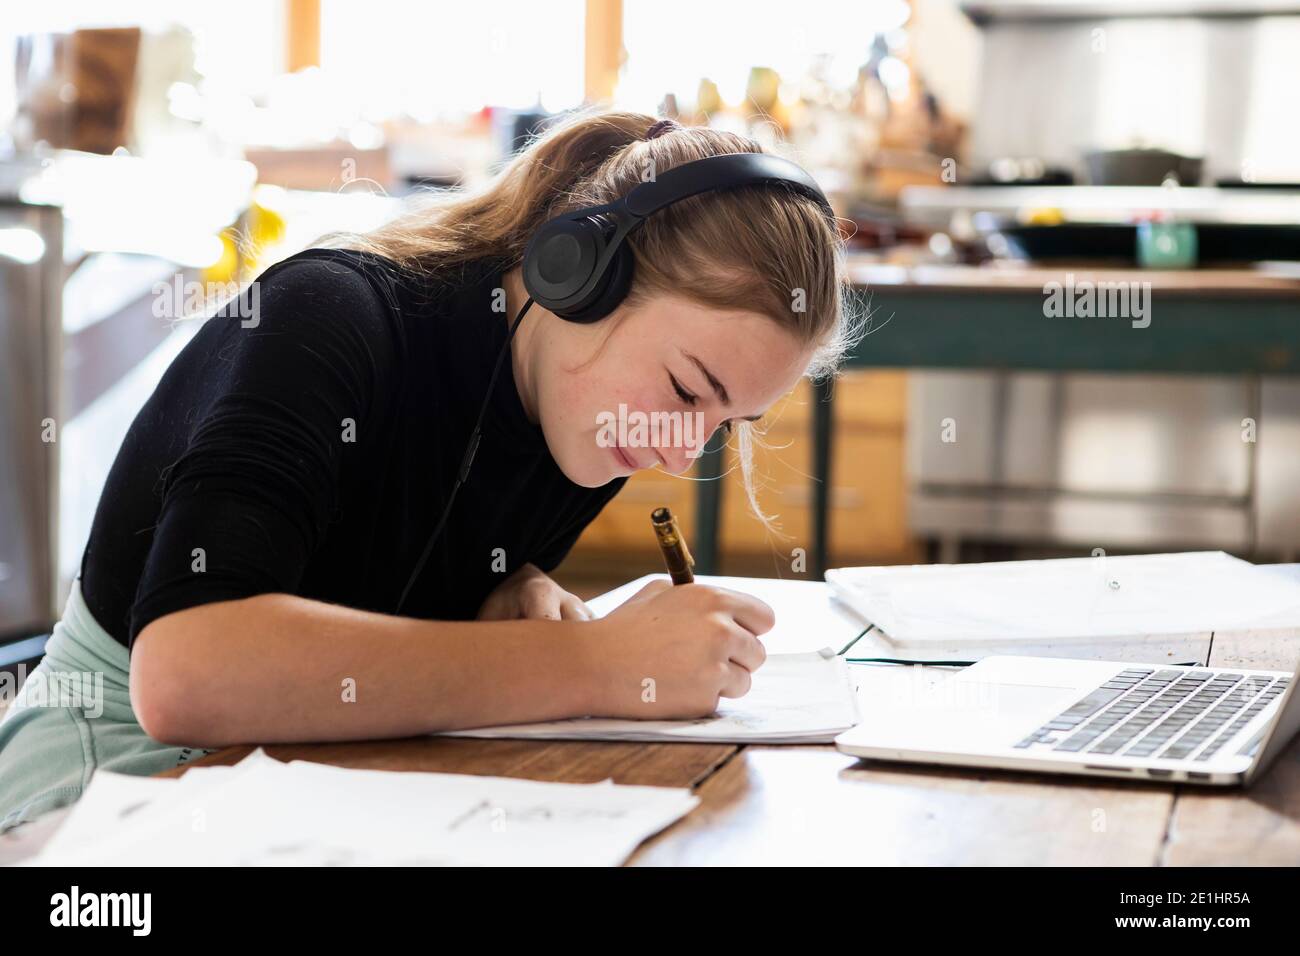 teenage girl wearing headphones, drawing on paper Stock Photo